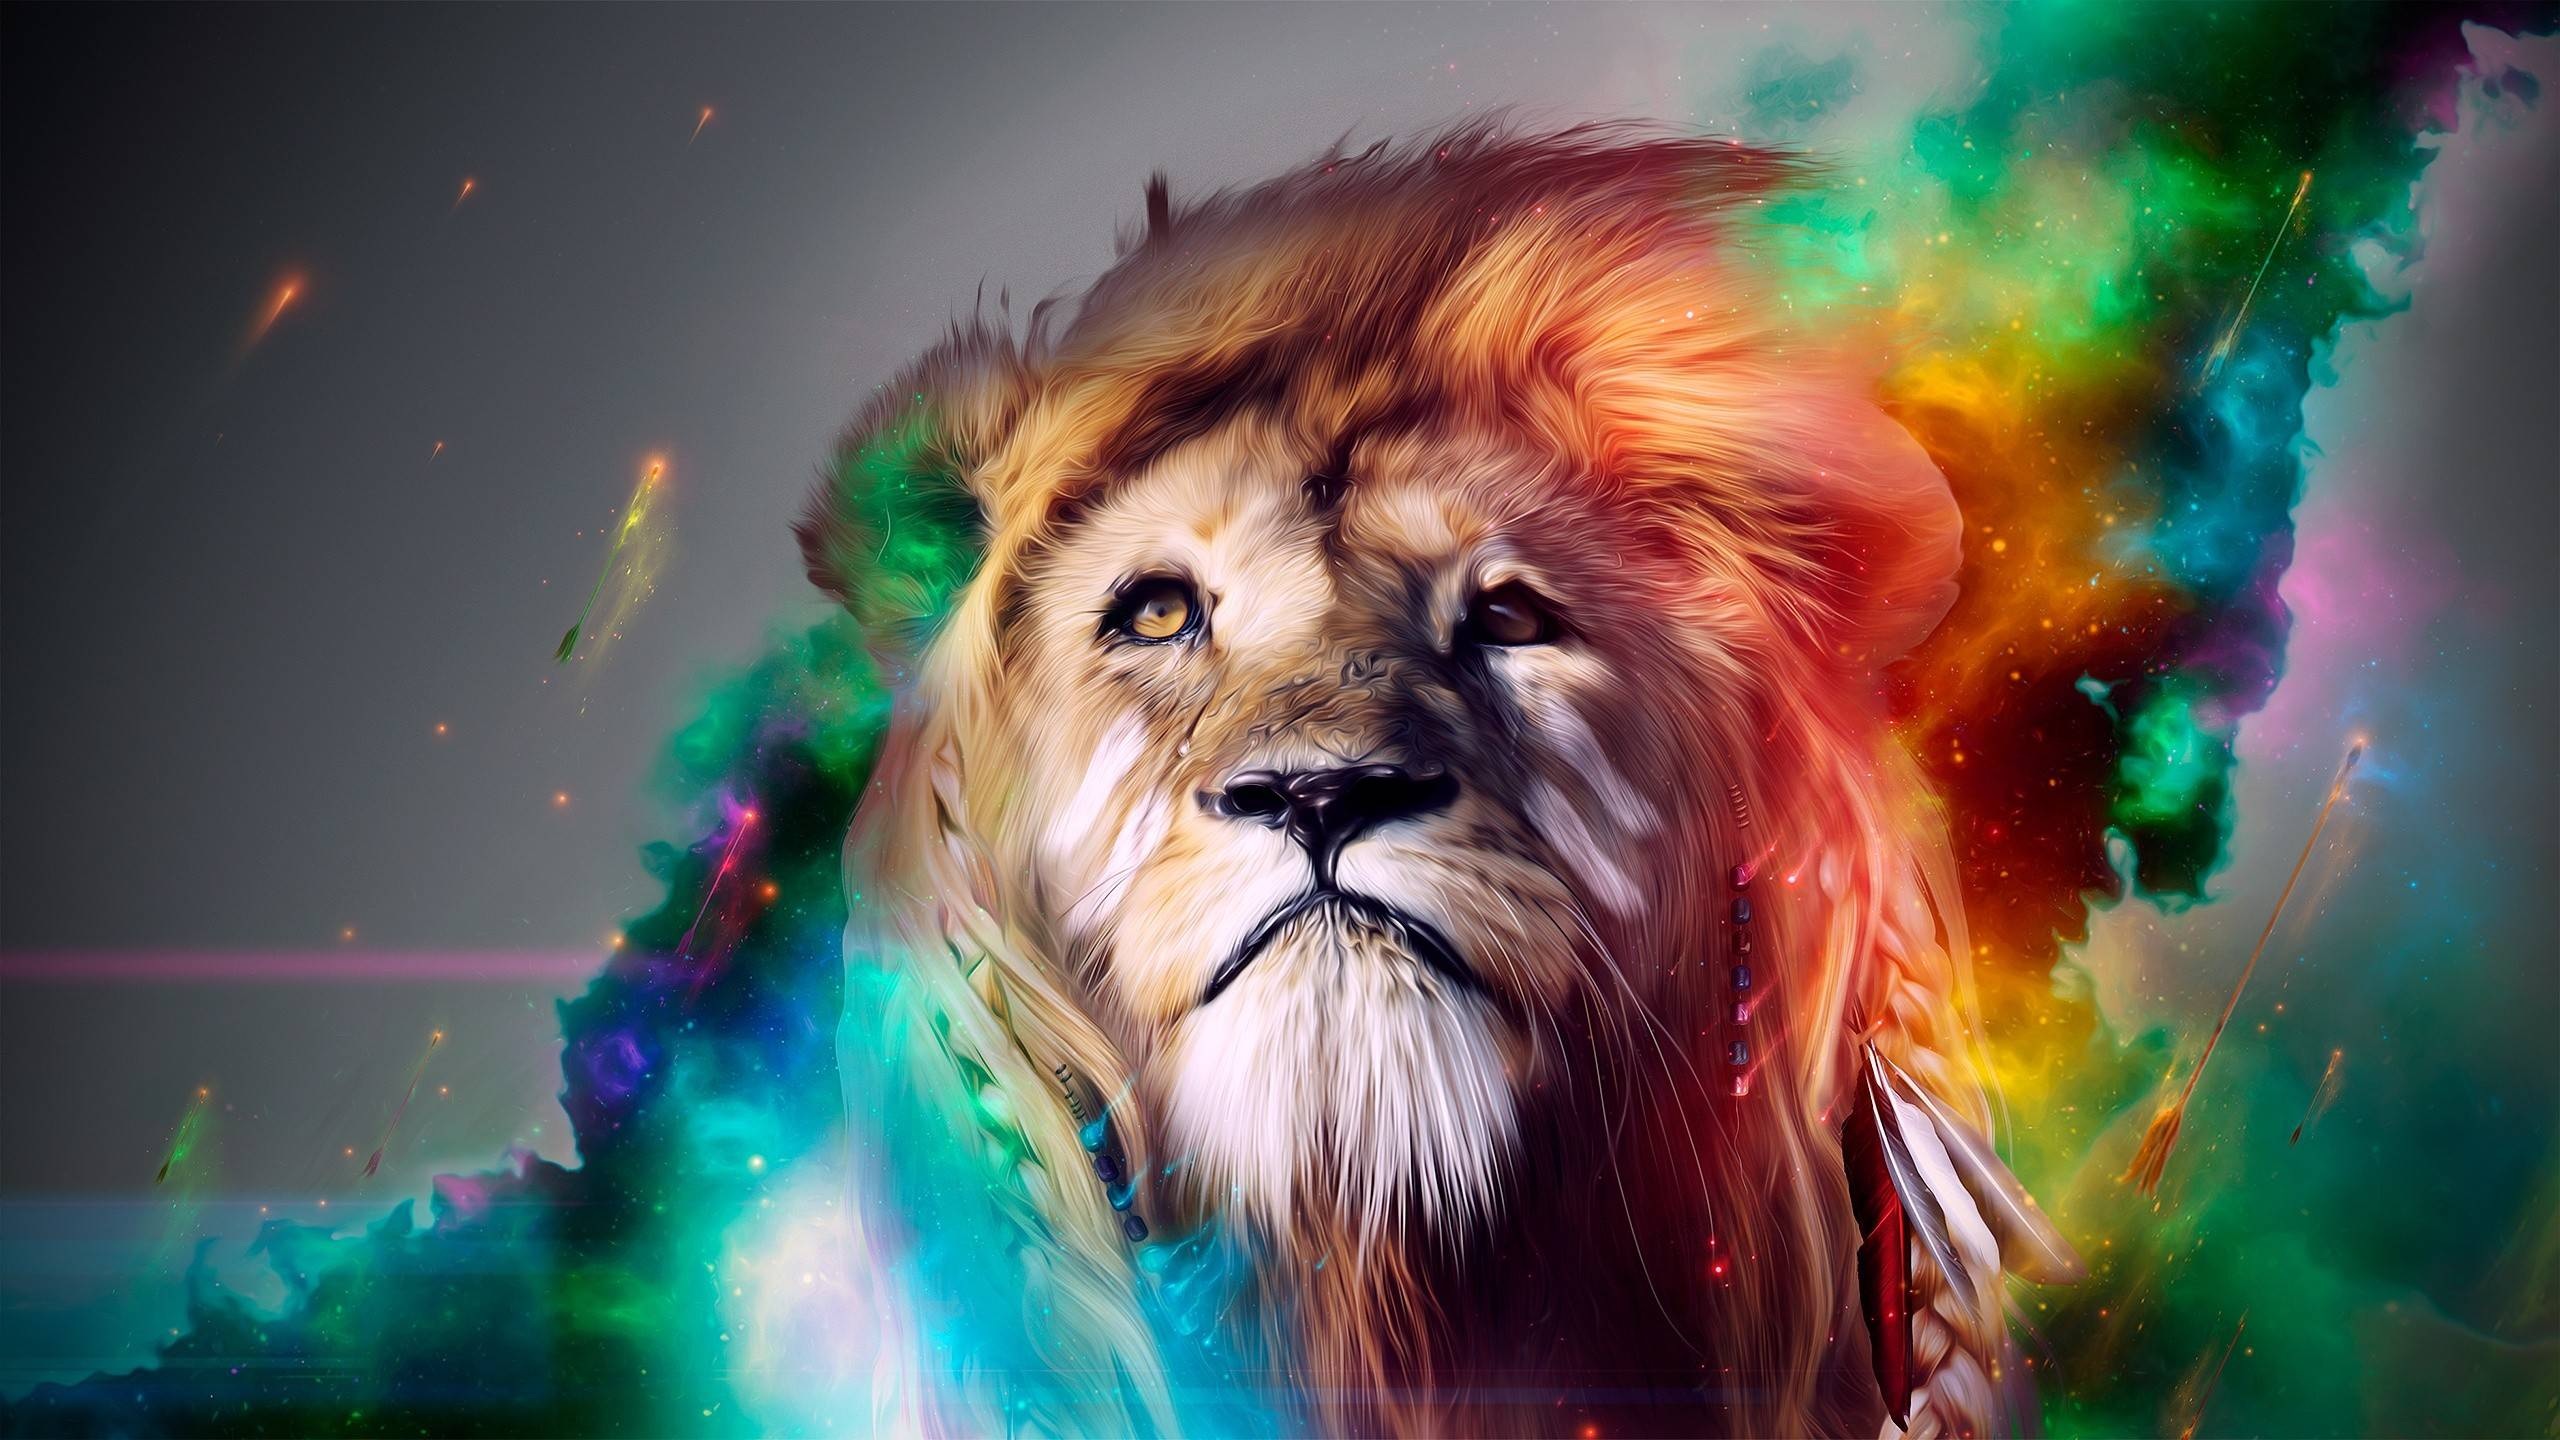 Trippy Colorful Lion Destkop Backgrounddestkop Background